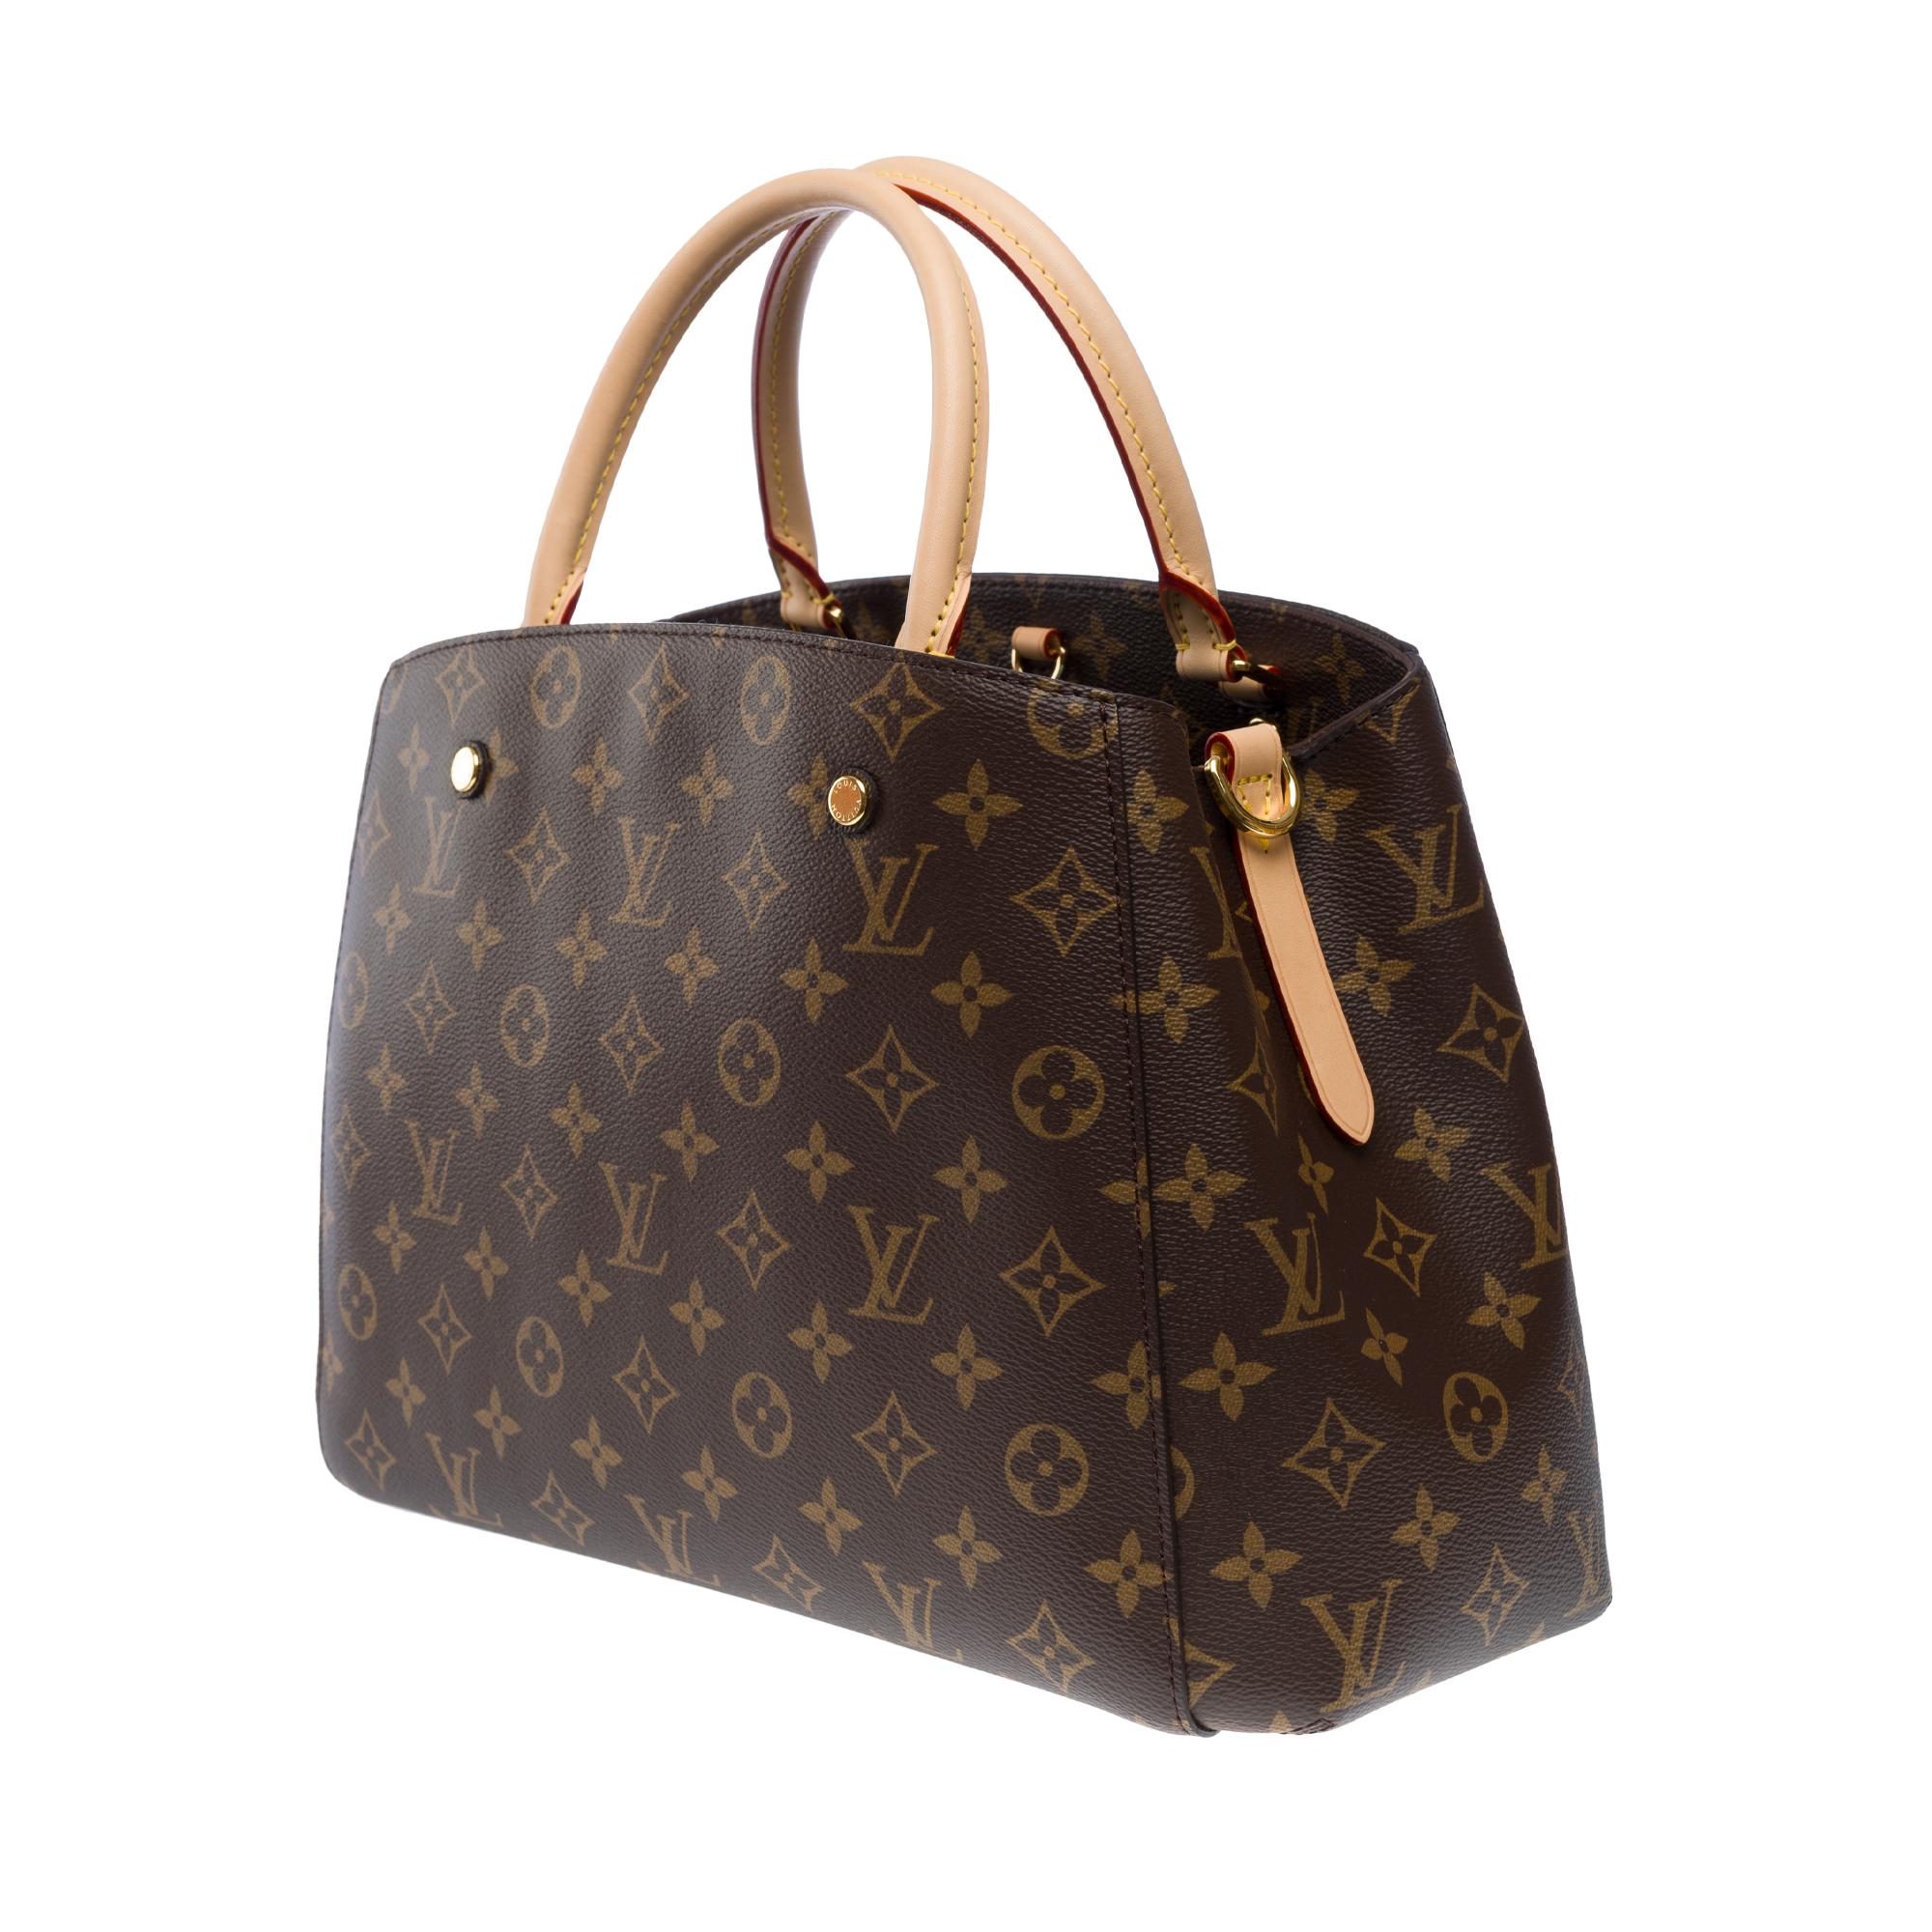 Women's New Louis Vuitton Montaigne MM handbag strap in brown monogram canvas, GHW For Sale